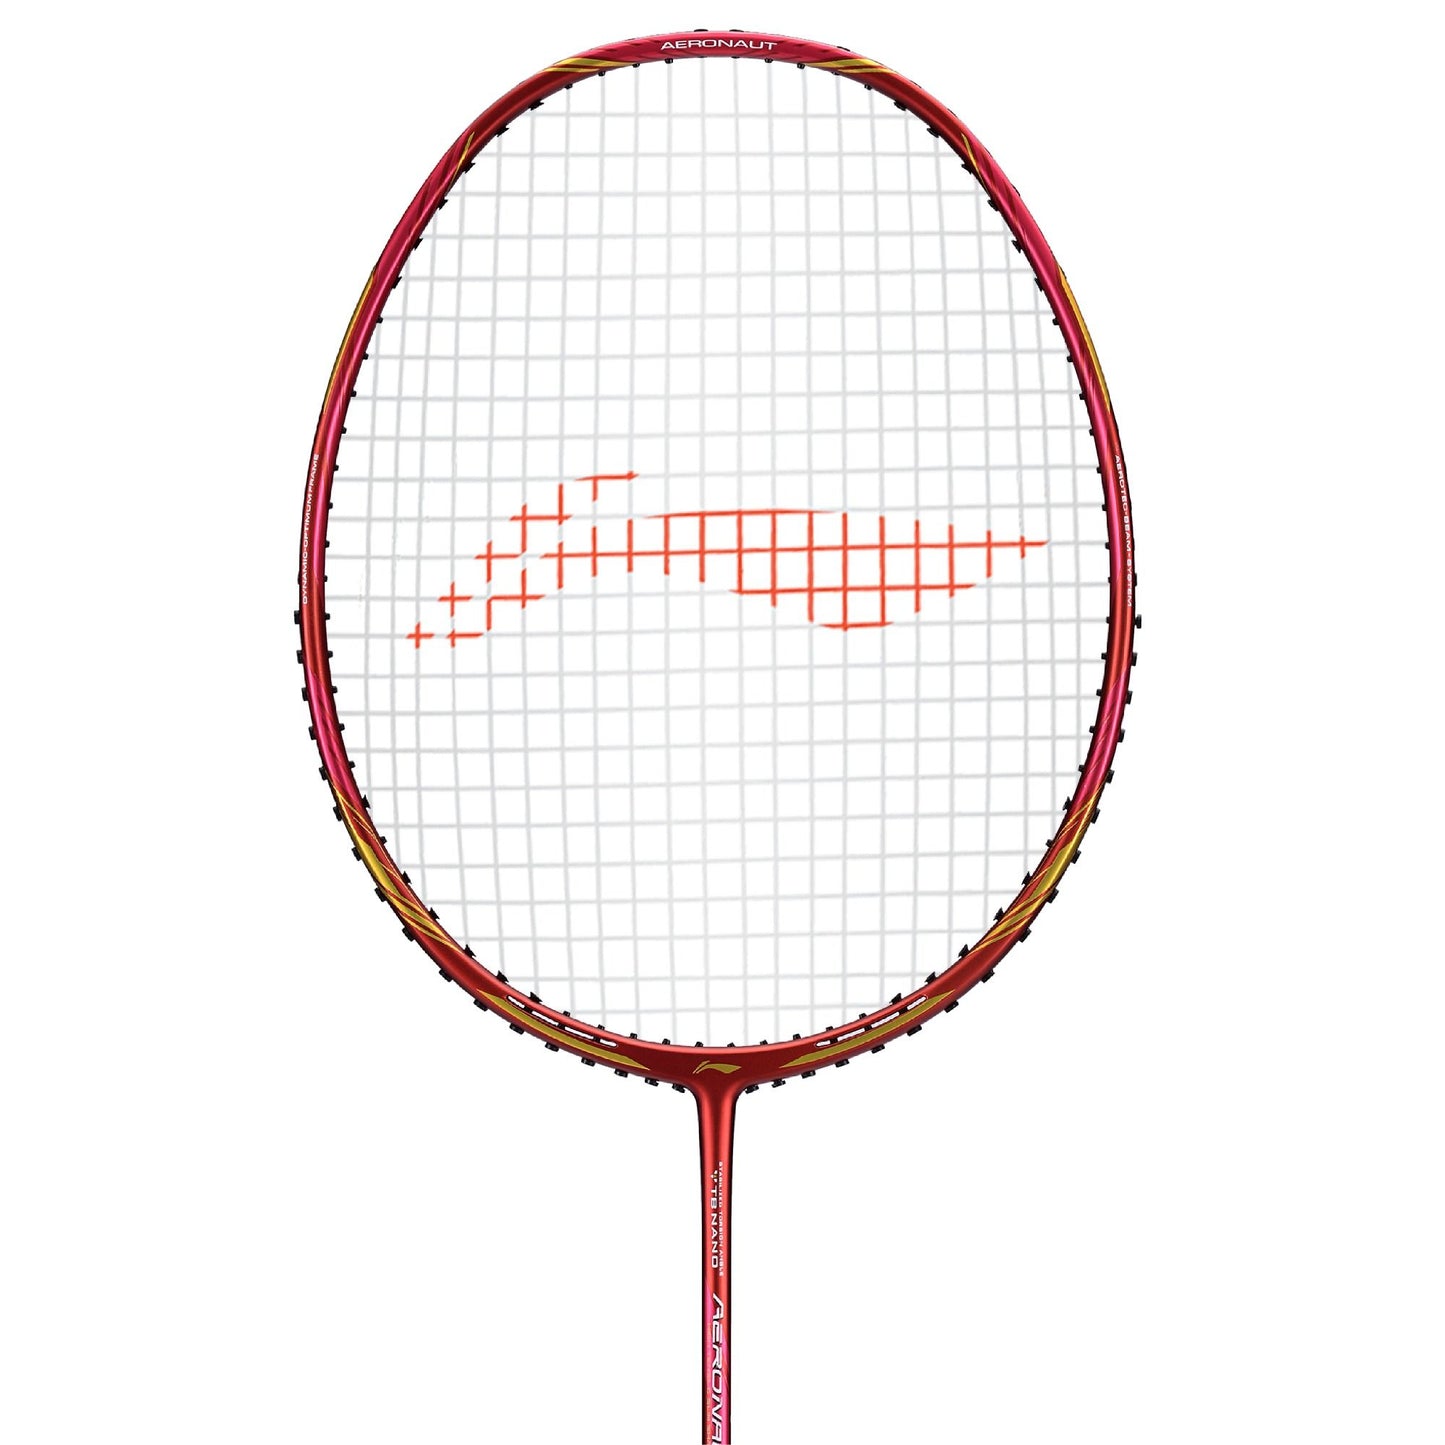 Li-Ning Aeronaut 4000 Boost (Red) Badminton Racket